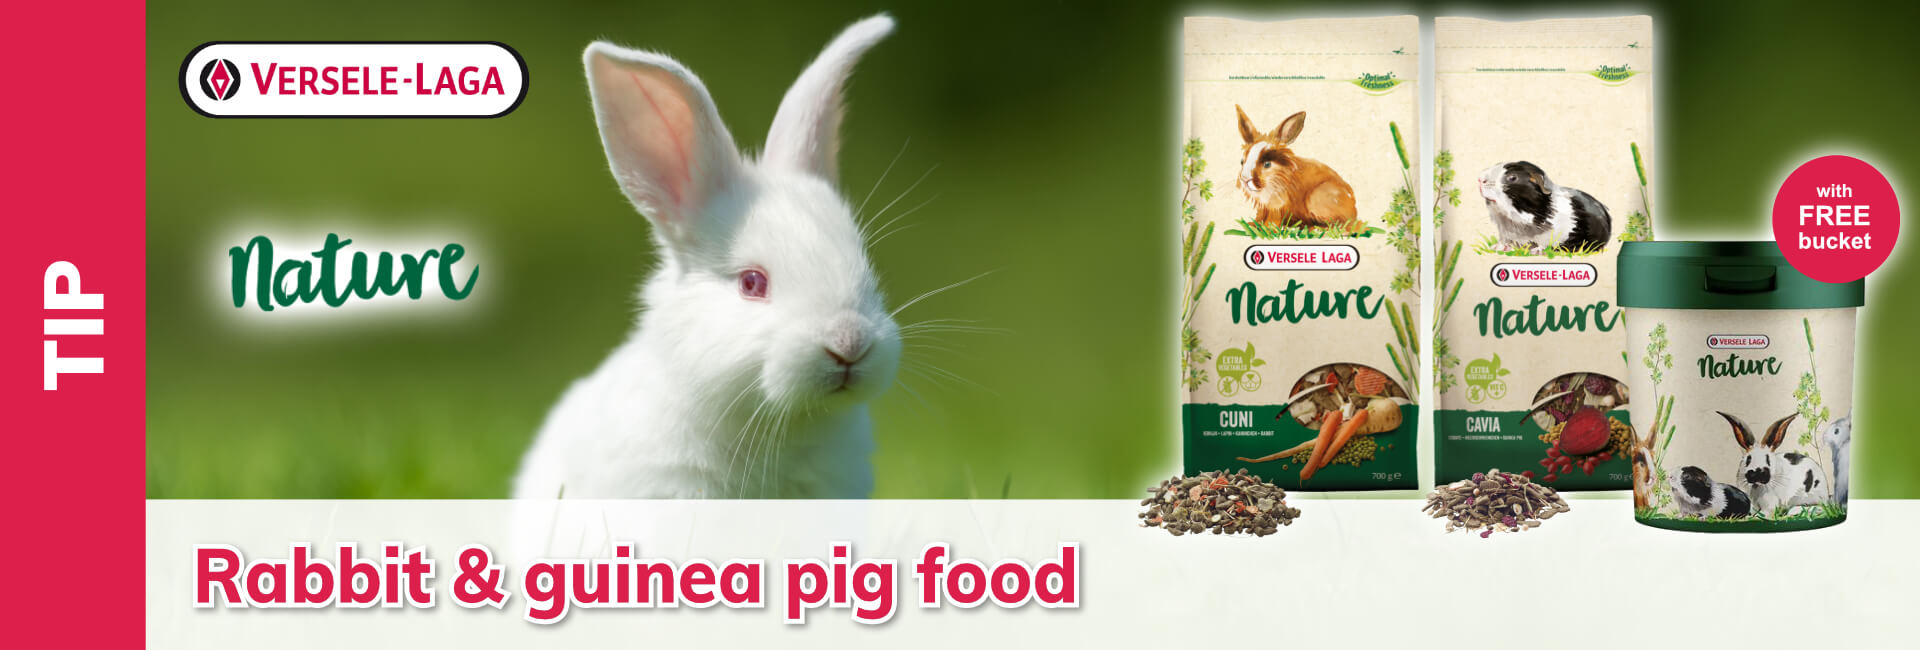 Rabbit & guinea pig food